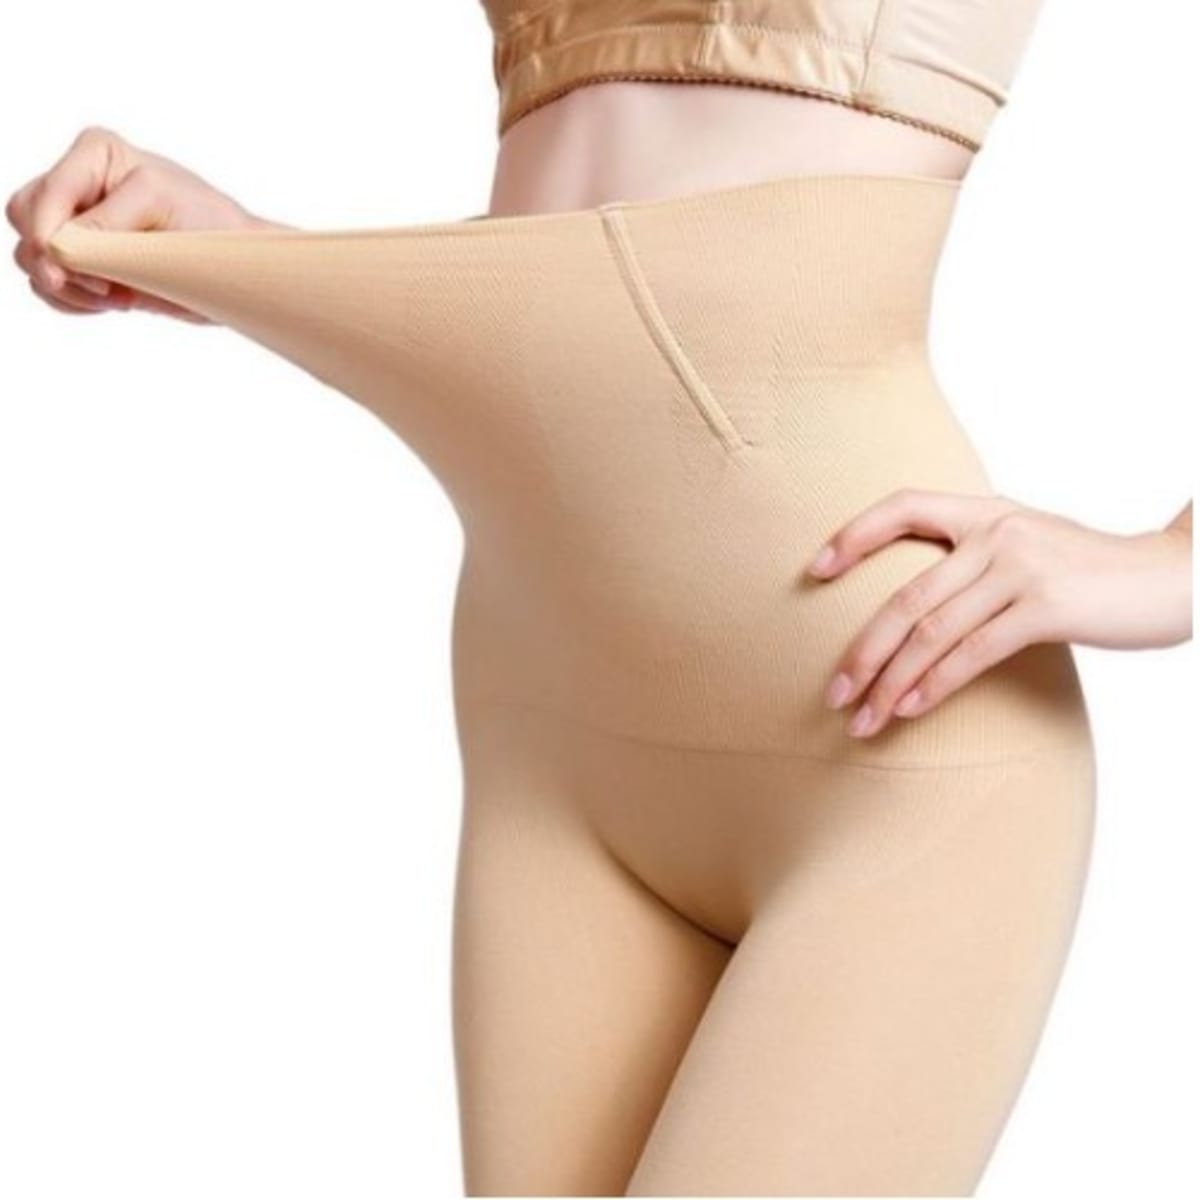 Seamless Women High Waist Slimming Tummy Control Knickers Pants